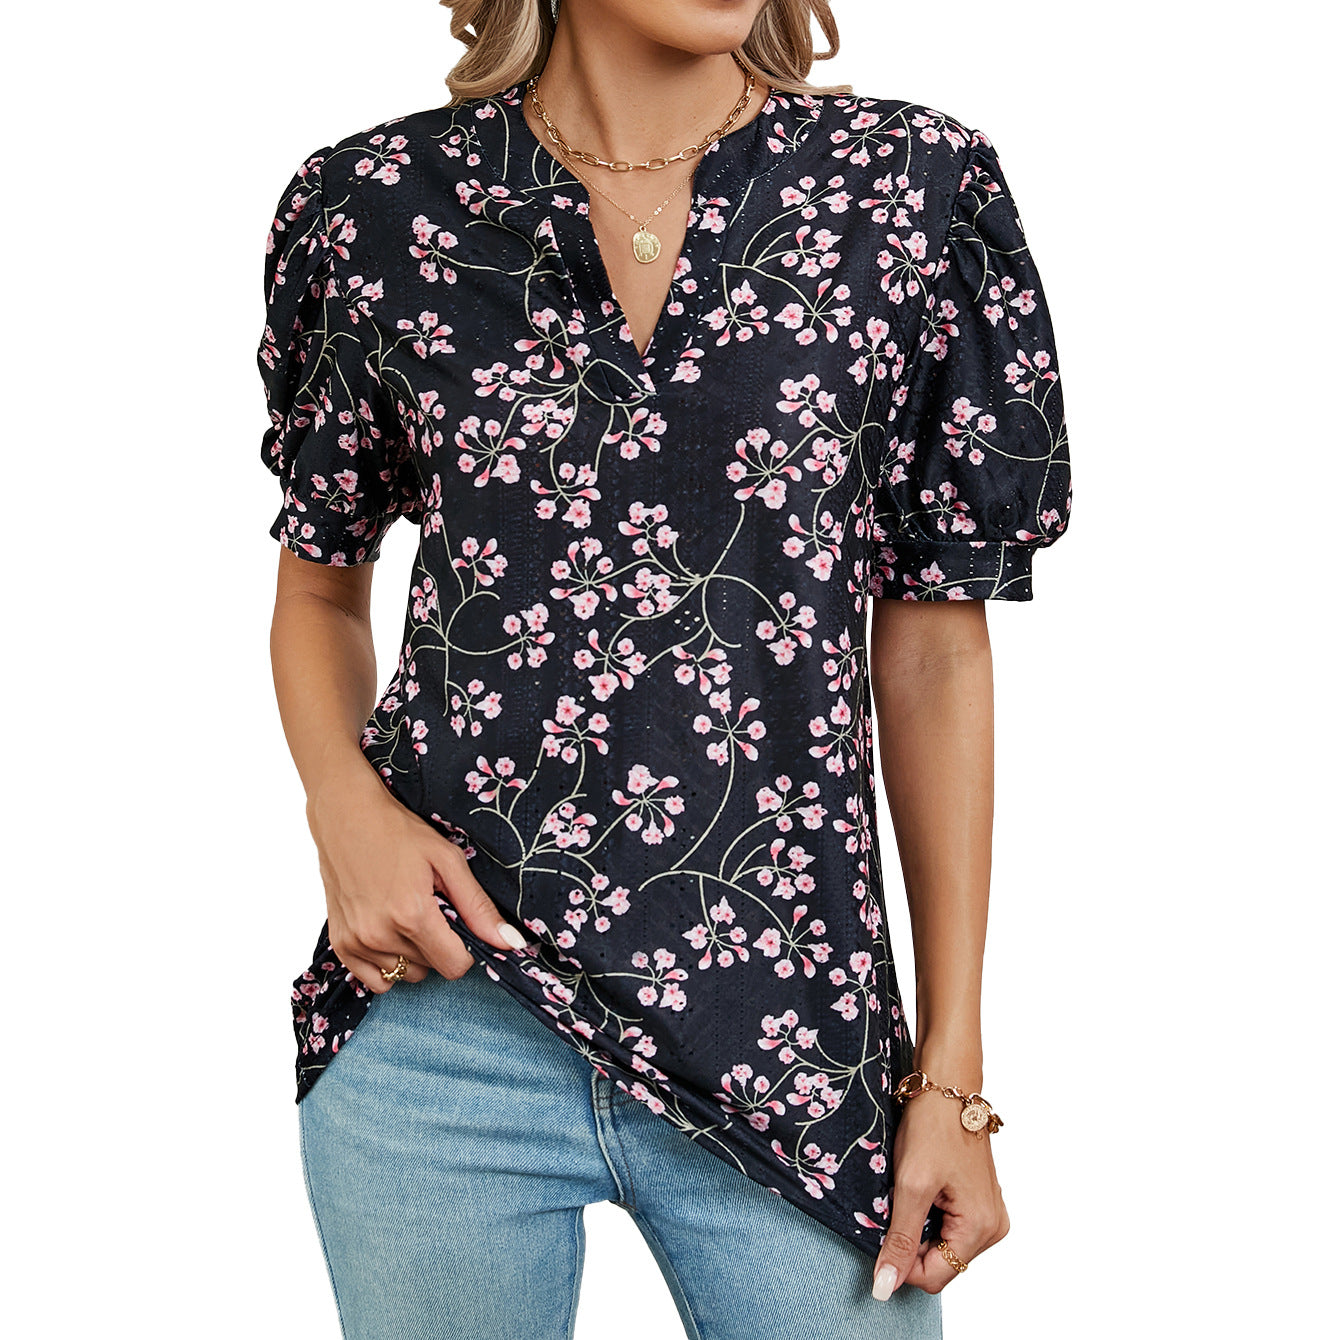 Women's Innovative Loose Short-sleeved Printed T-shirt Tops